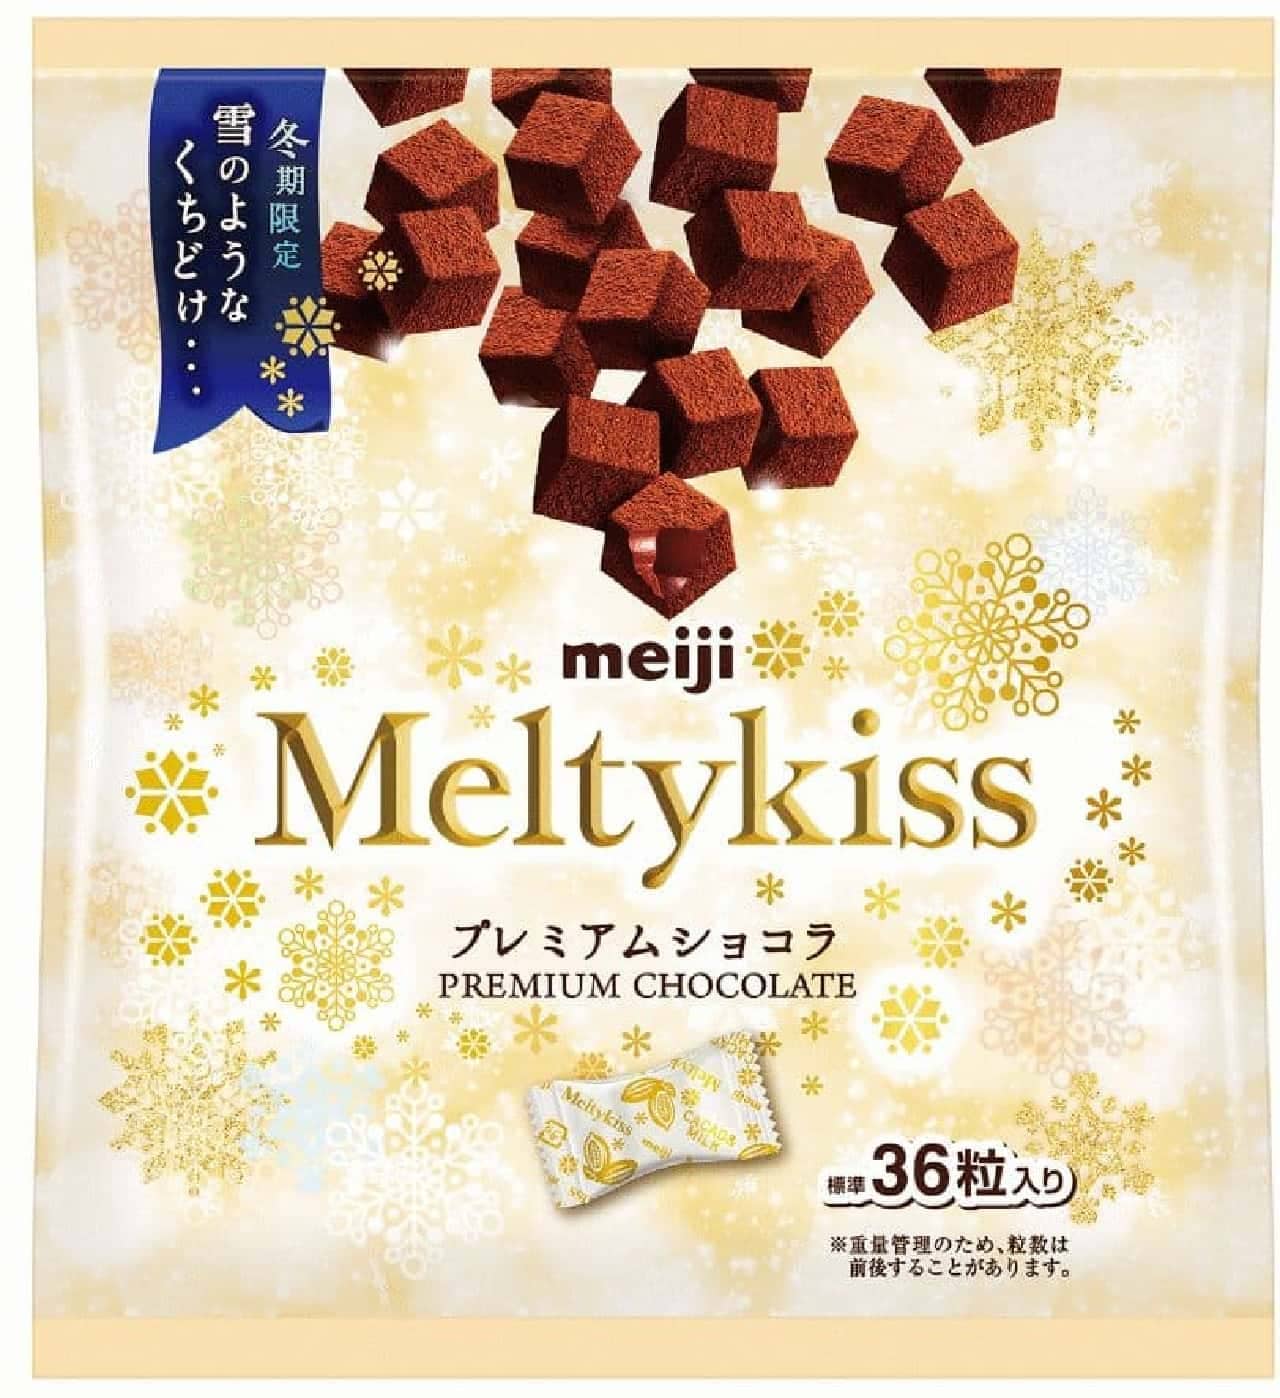 Meiji "Meltykiss Premium Chocolat Bag